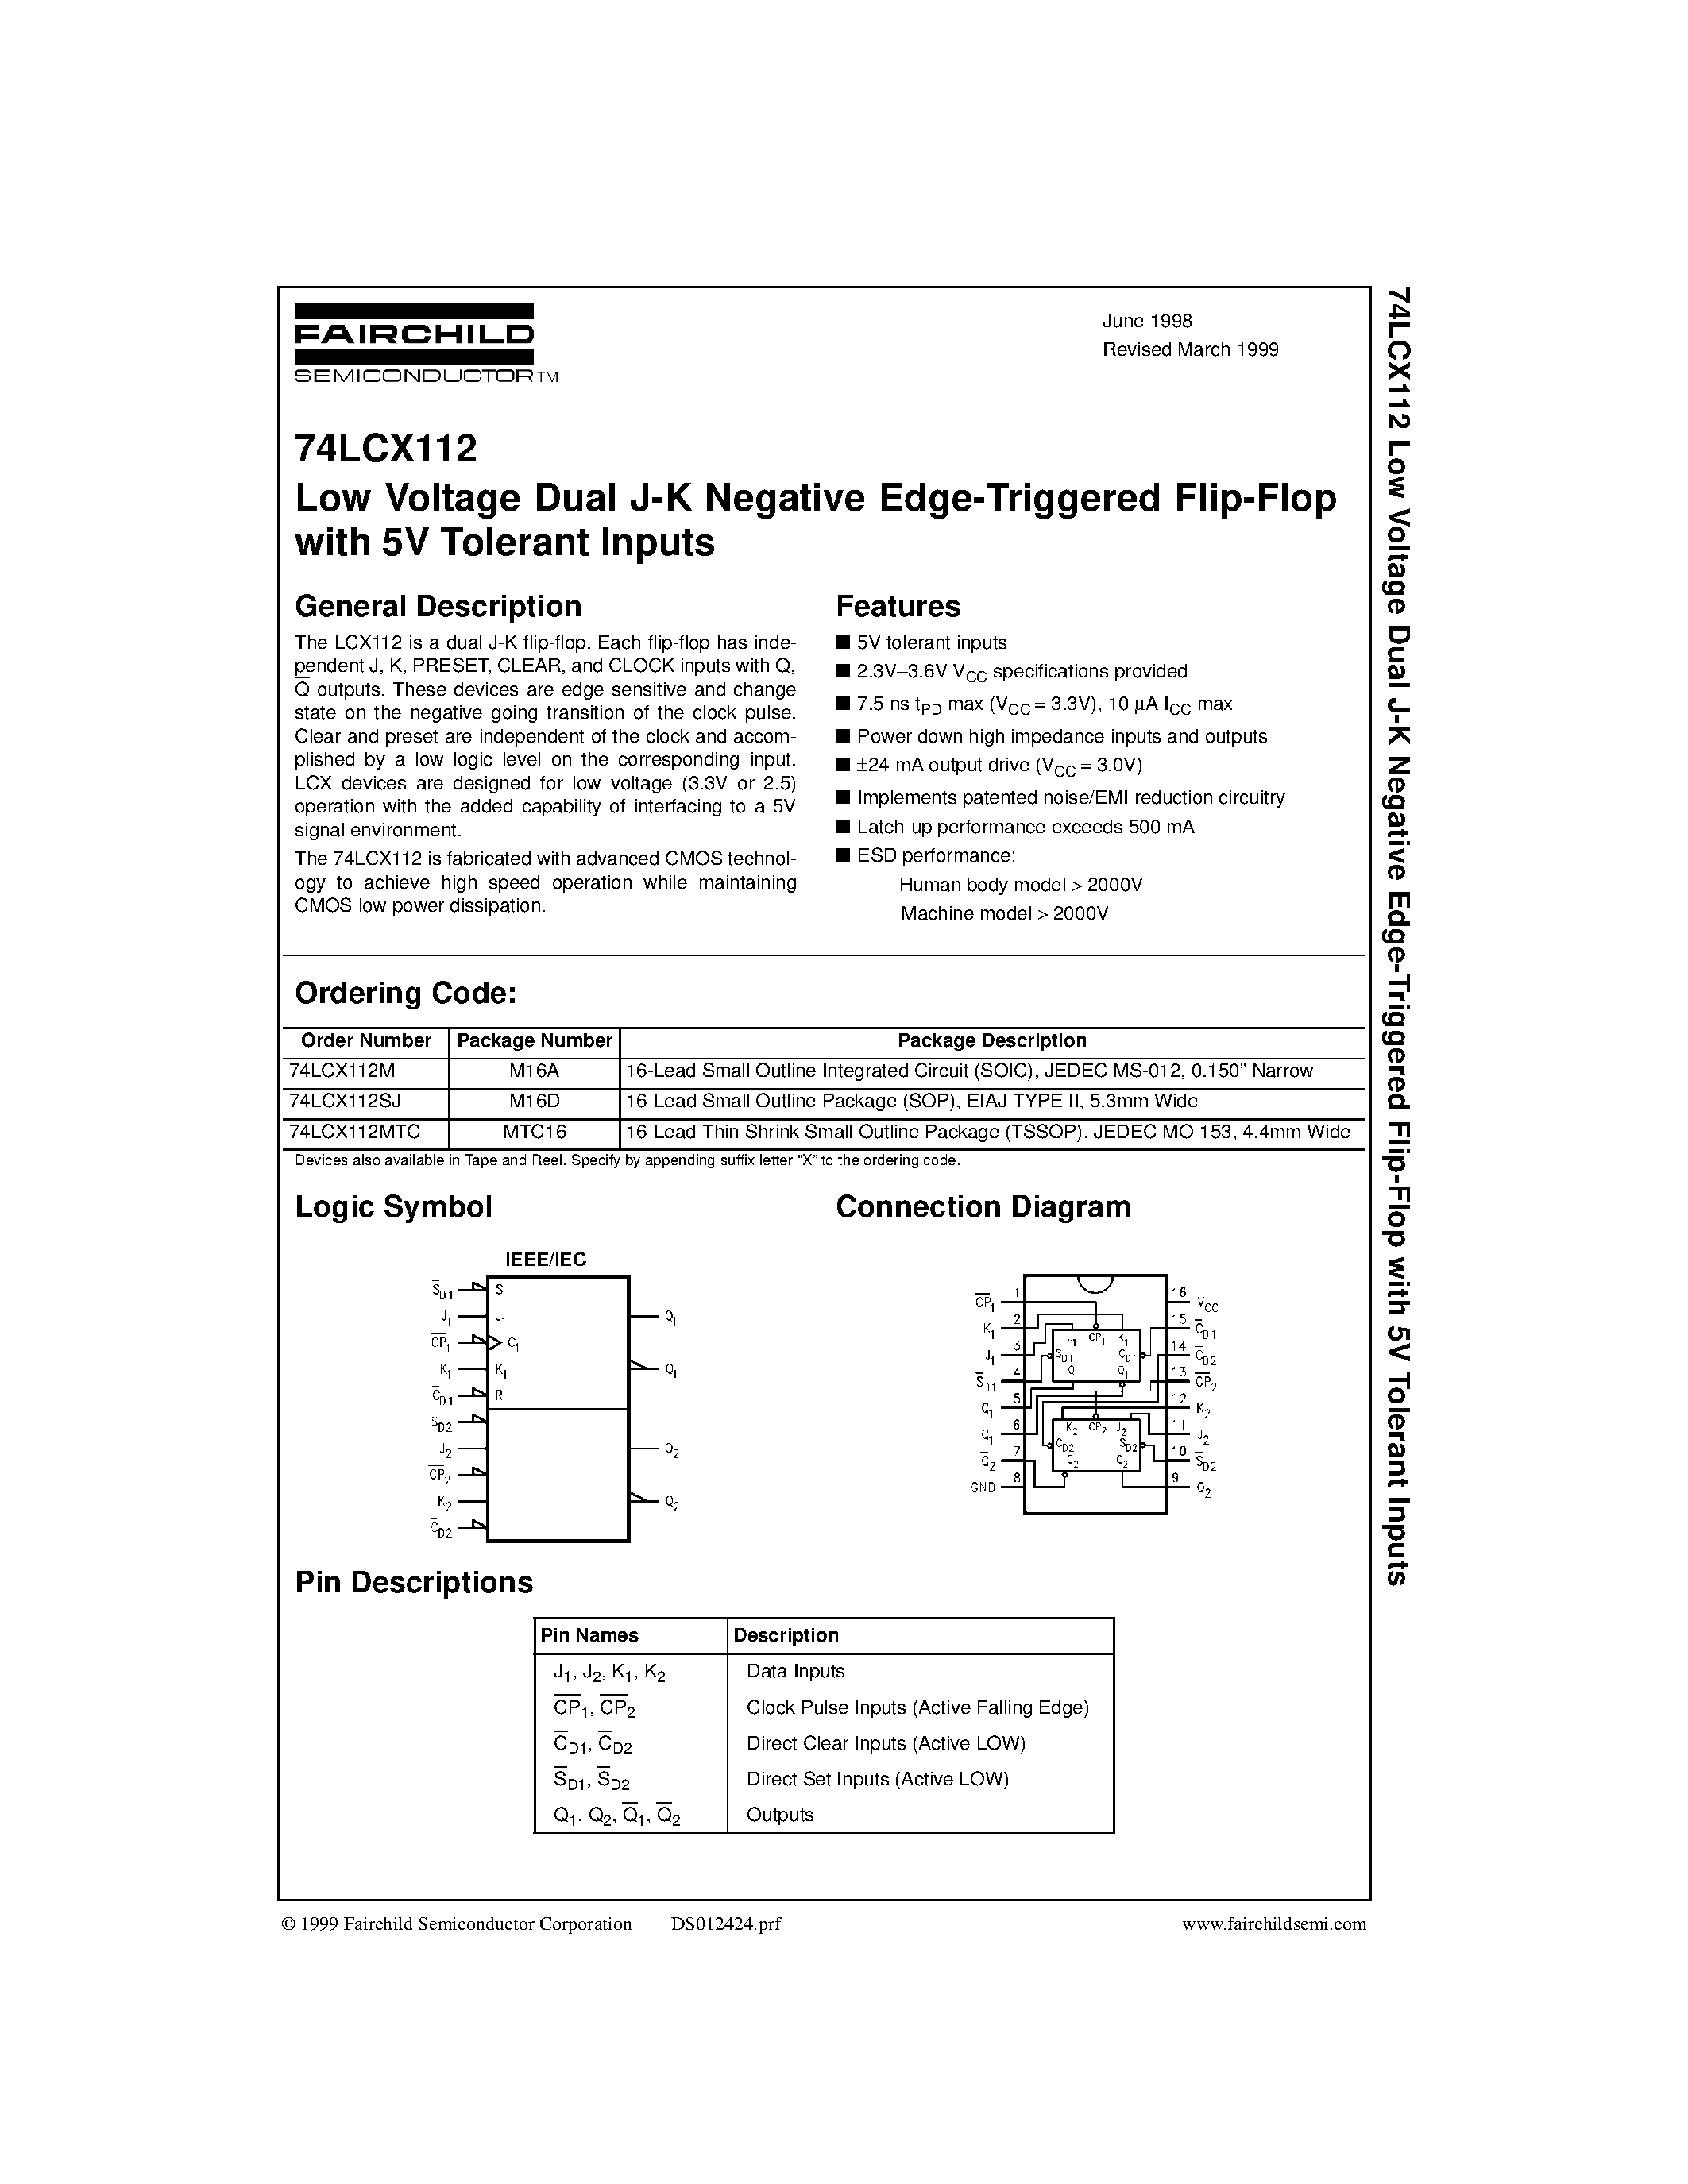 Datasheet 74LCX112M - Low Voltage Dual J-K Negative Edge-Triggered Flip-Flop with 5V Tolerant Inputs page 1